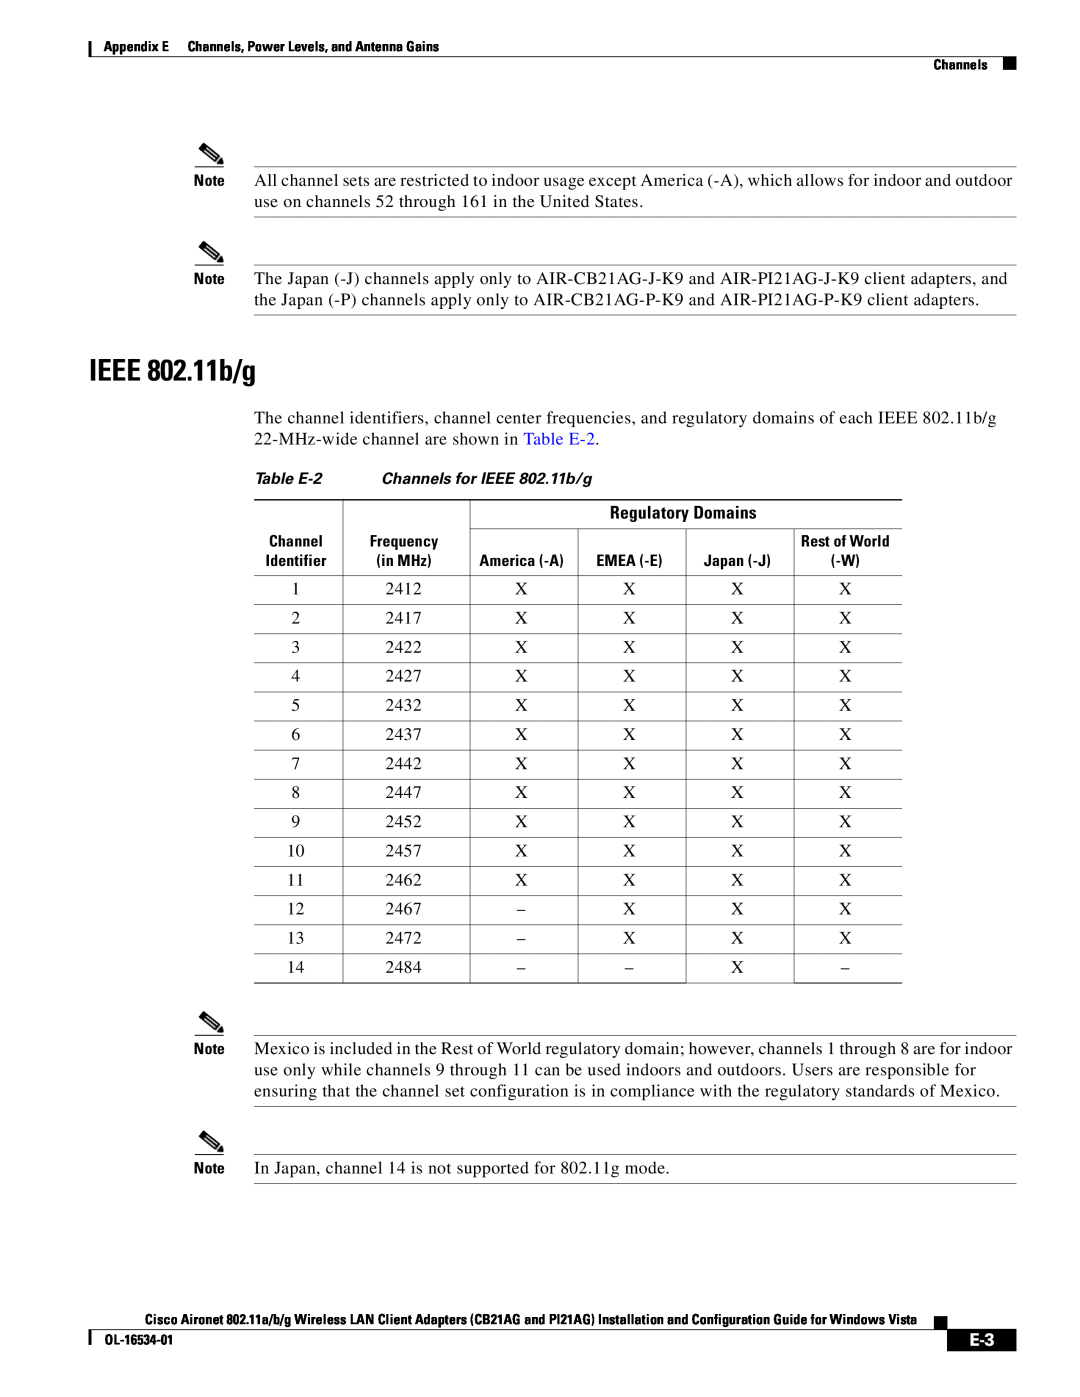 Cisco Systems CB21AG, PI21AG manual IEEE 802.11b/g, Regulatory Domains 